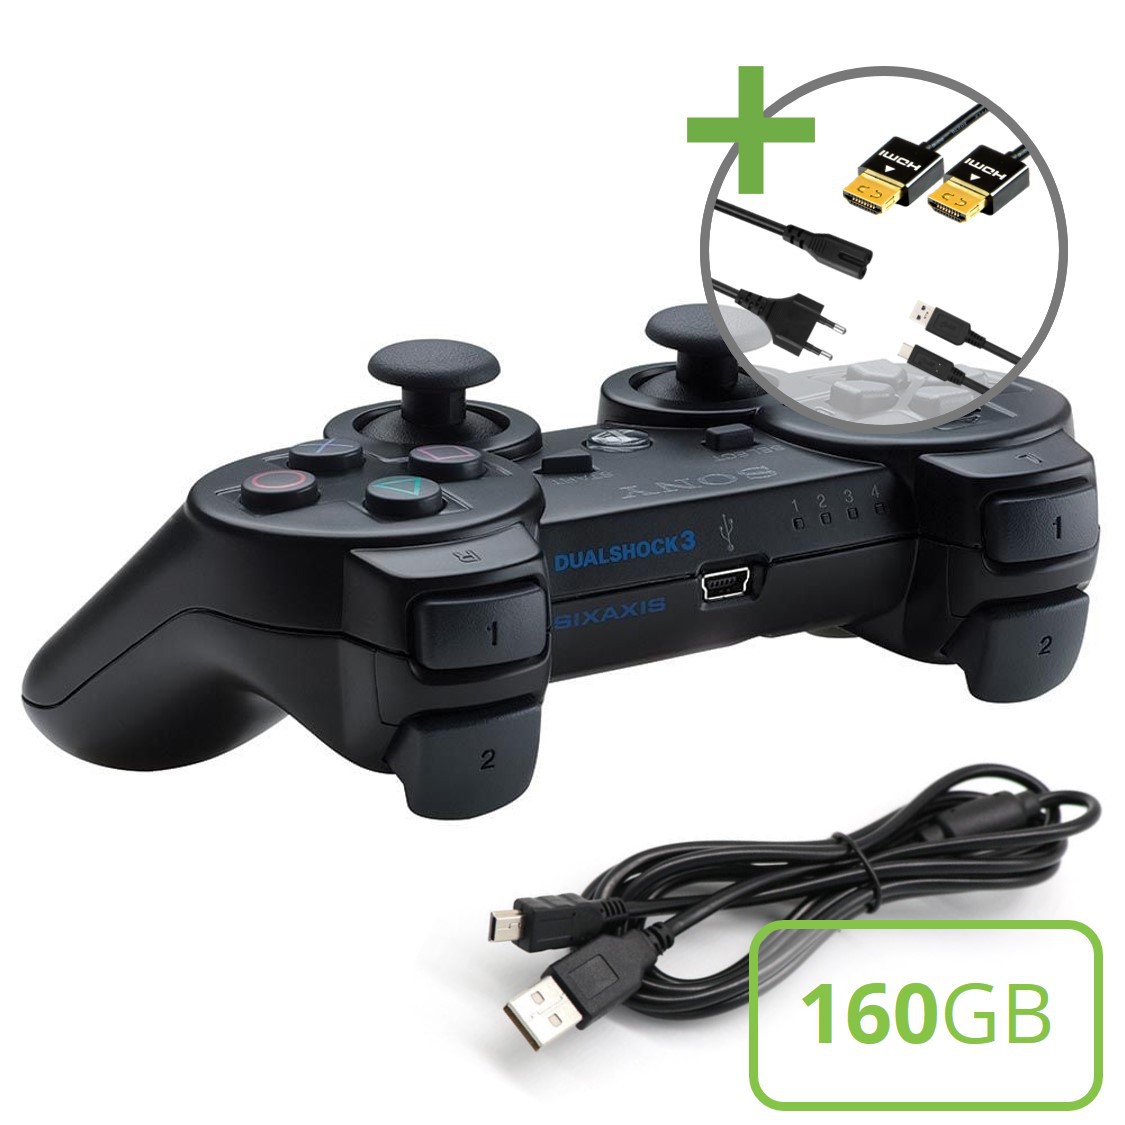 Sony PlayStation 3 Slim (160GB) Starter Pack - DualShock Edition - Playstation 3 Hardware - 4